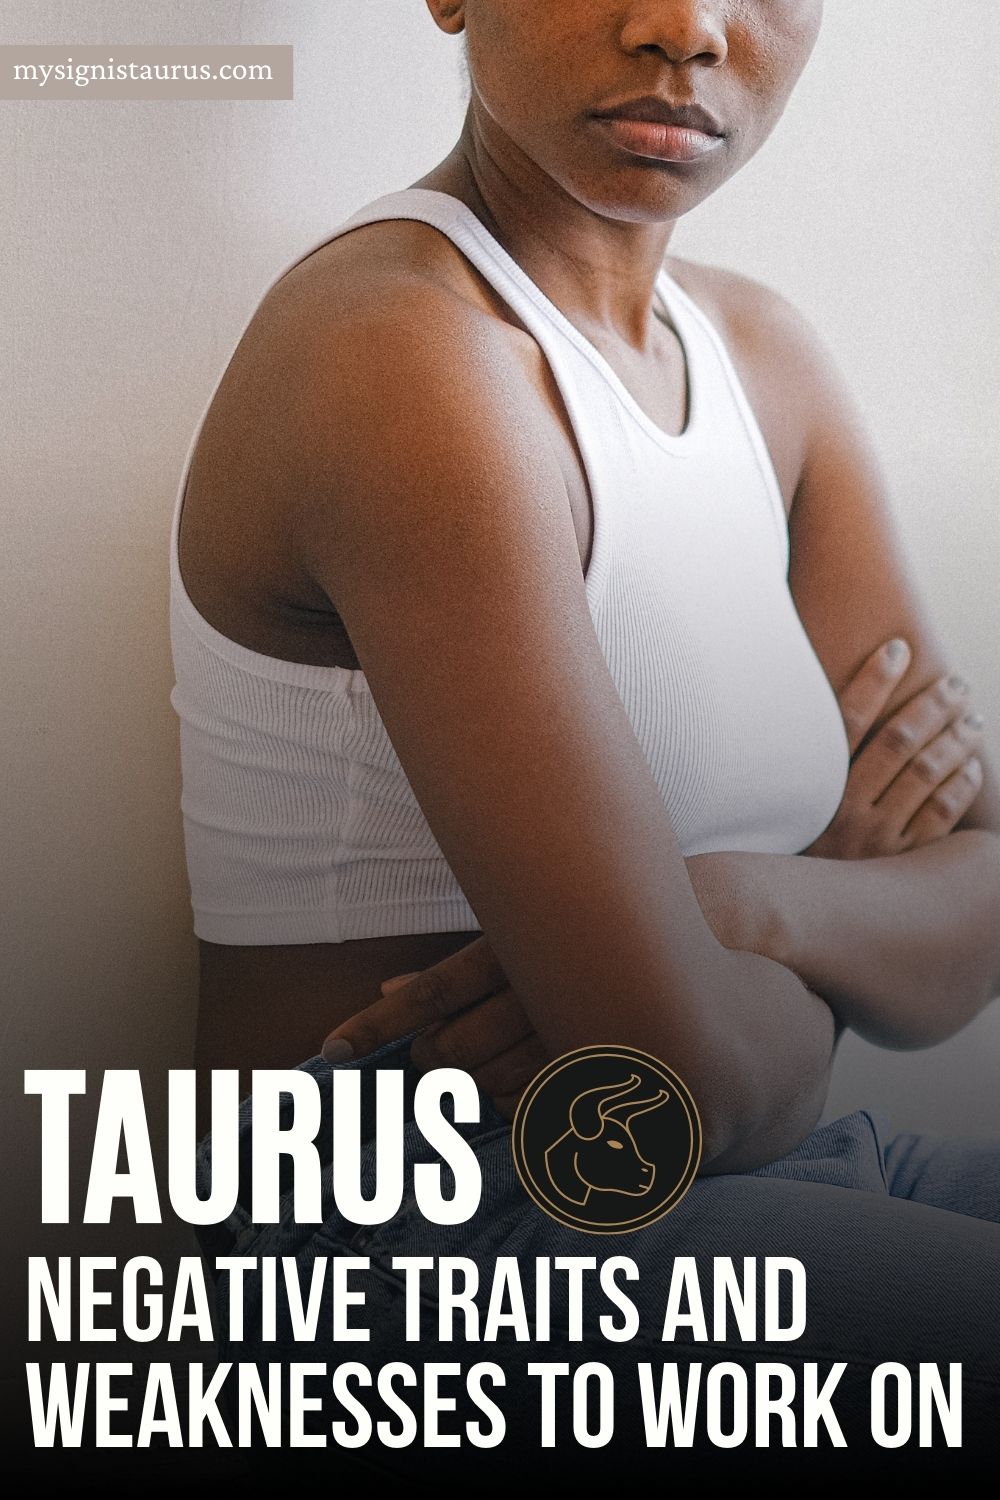 Taurus Negative traits and weaknesses #taurus #taurussign #zodiac #astrology